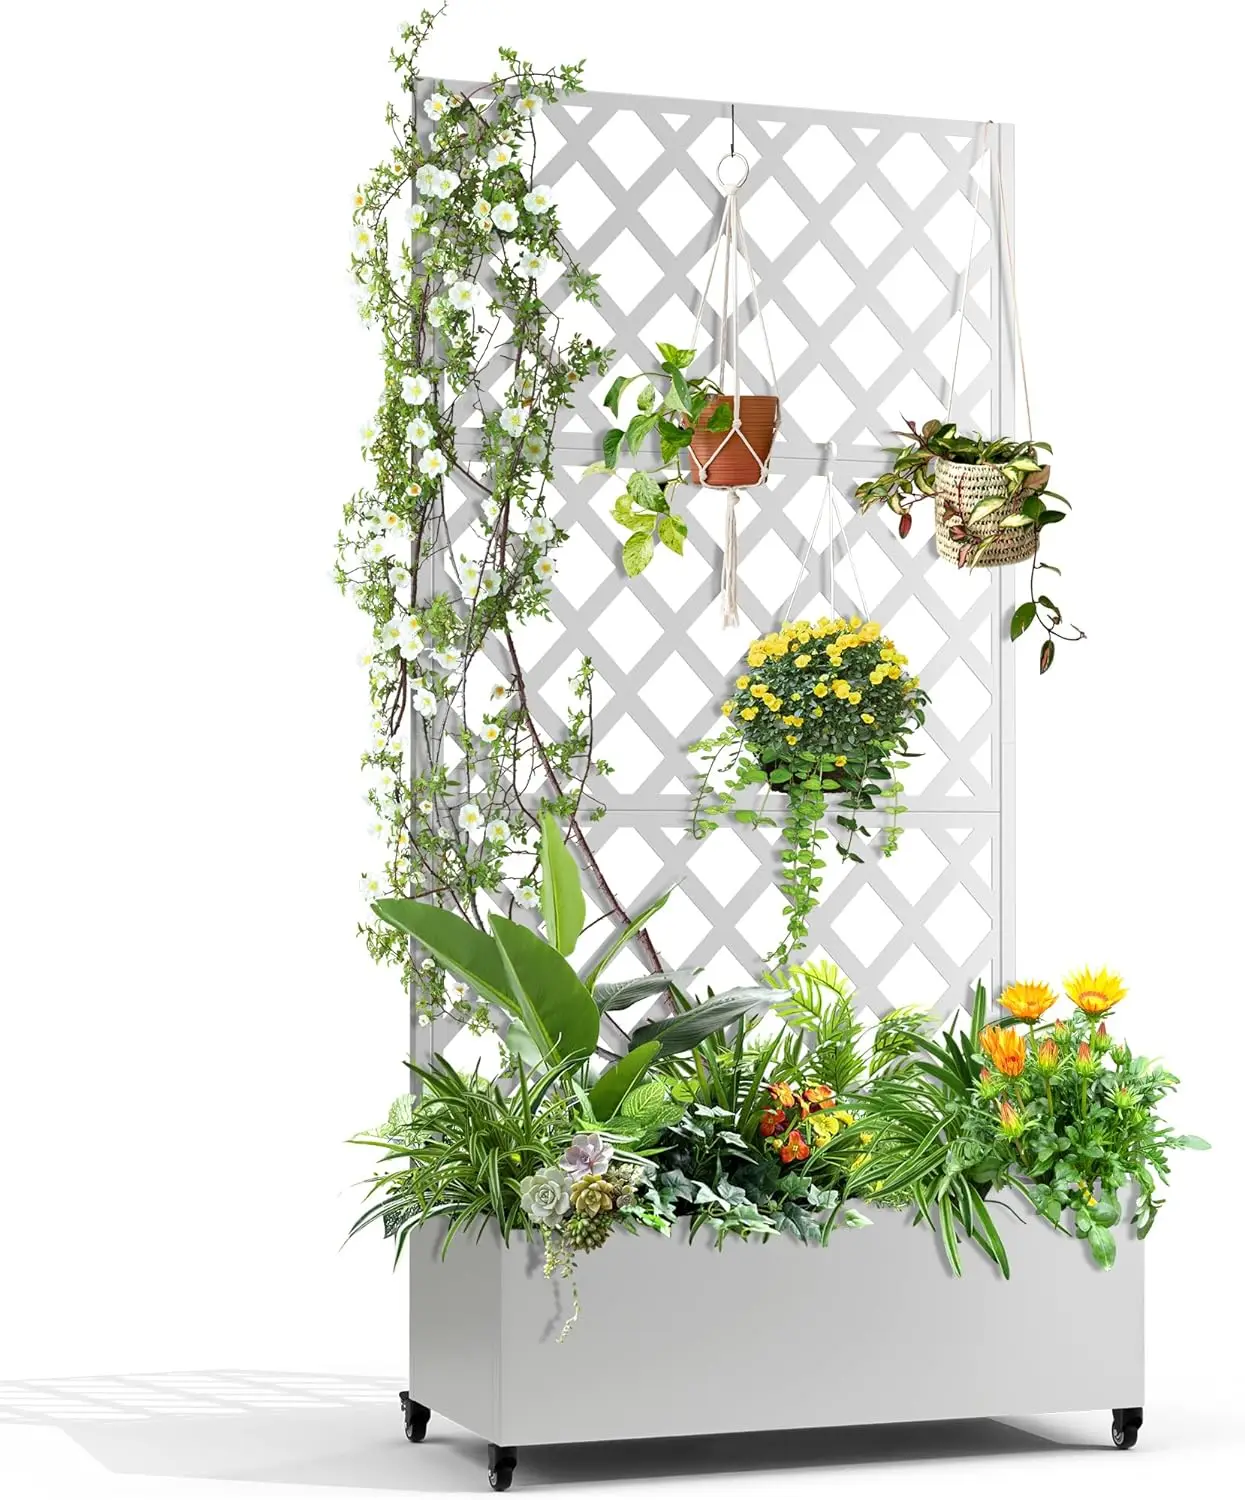 

Metal Planter Box with Diamond Lattice Trellis Planter Box for Climbing Plants/Vines, Galvanized Raised Garden Bed On Wheels